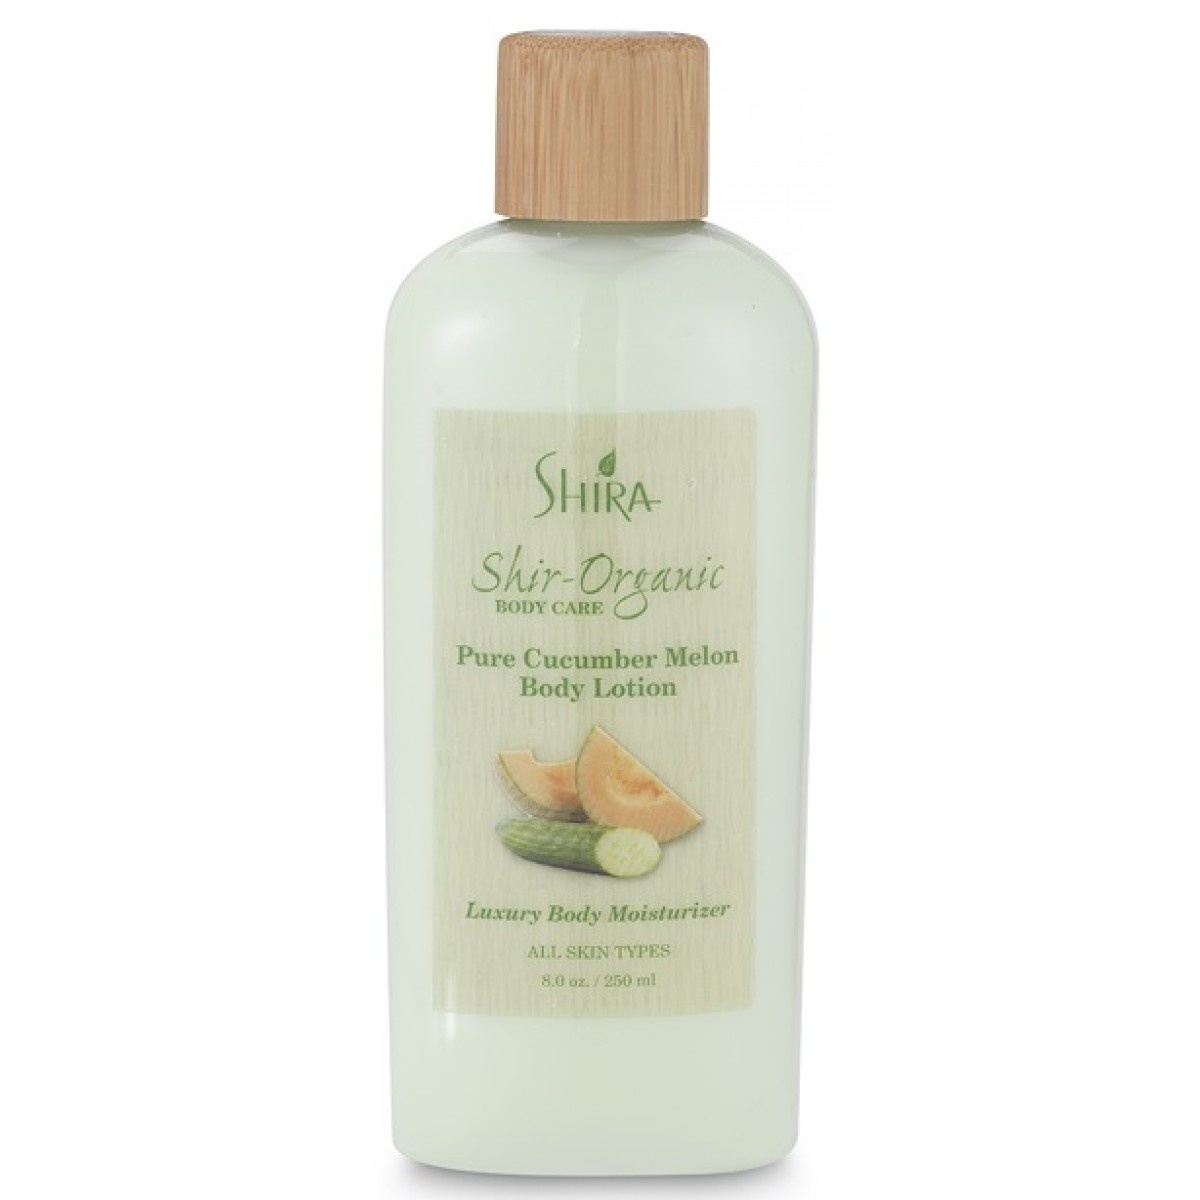 Shira Shir-Organic Pure Cucumber Melon Body Lotion